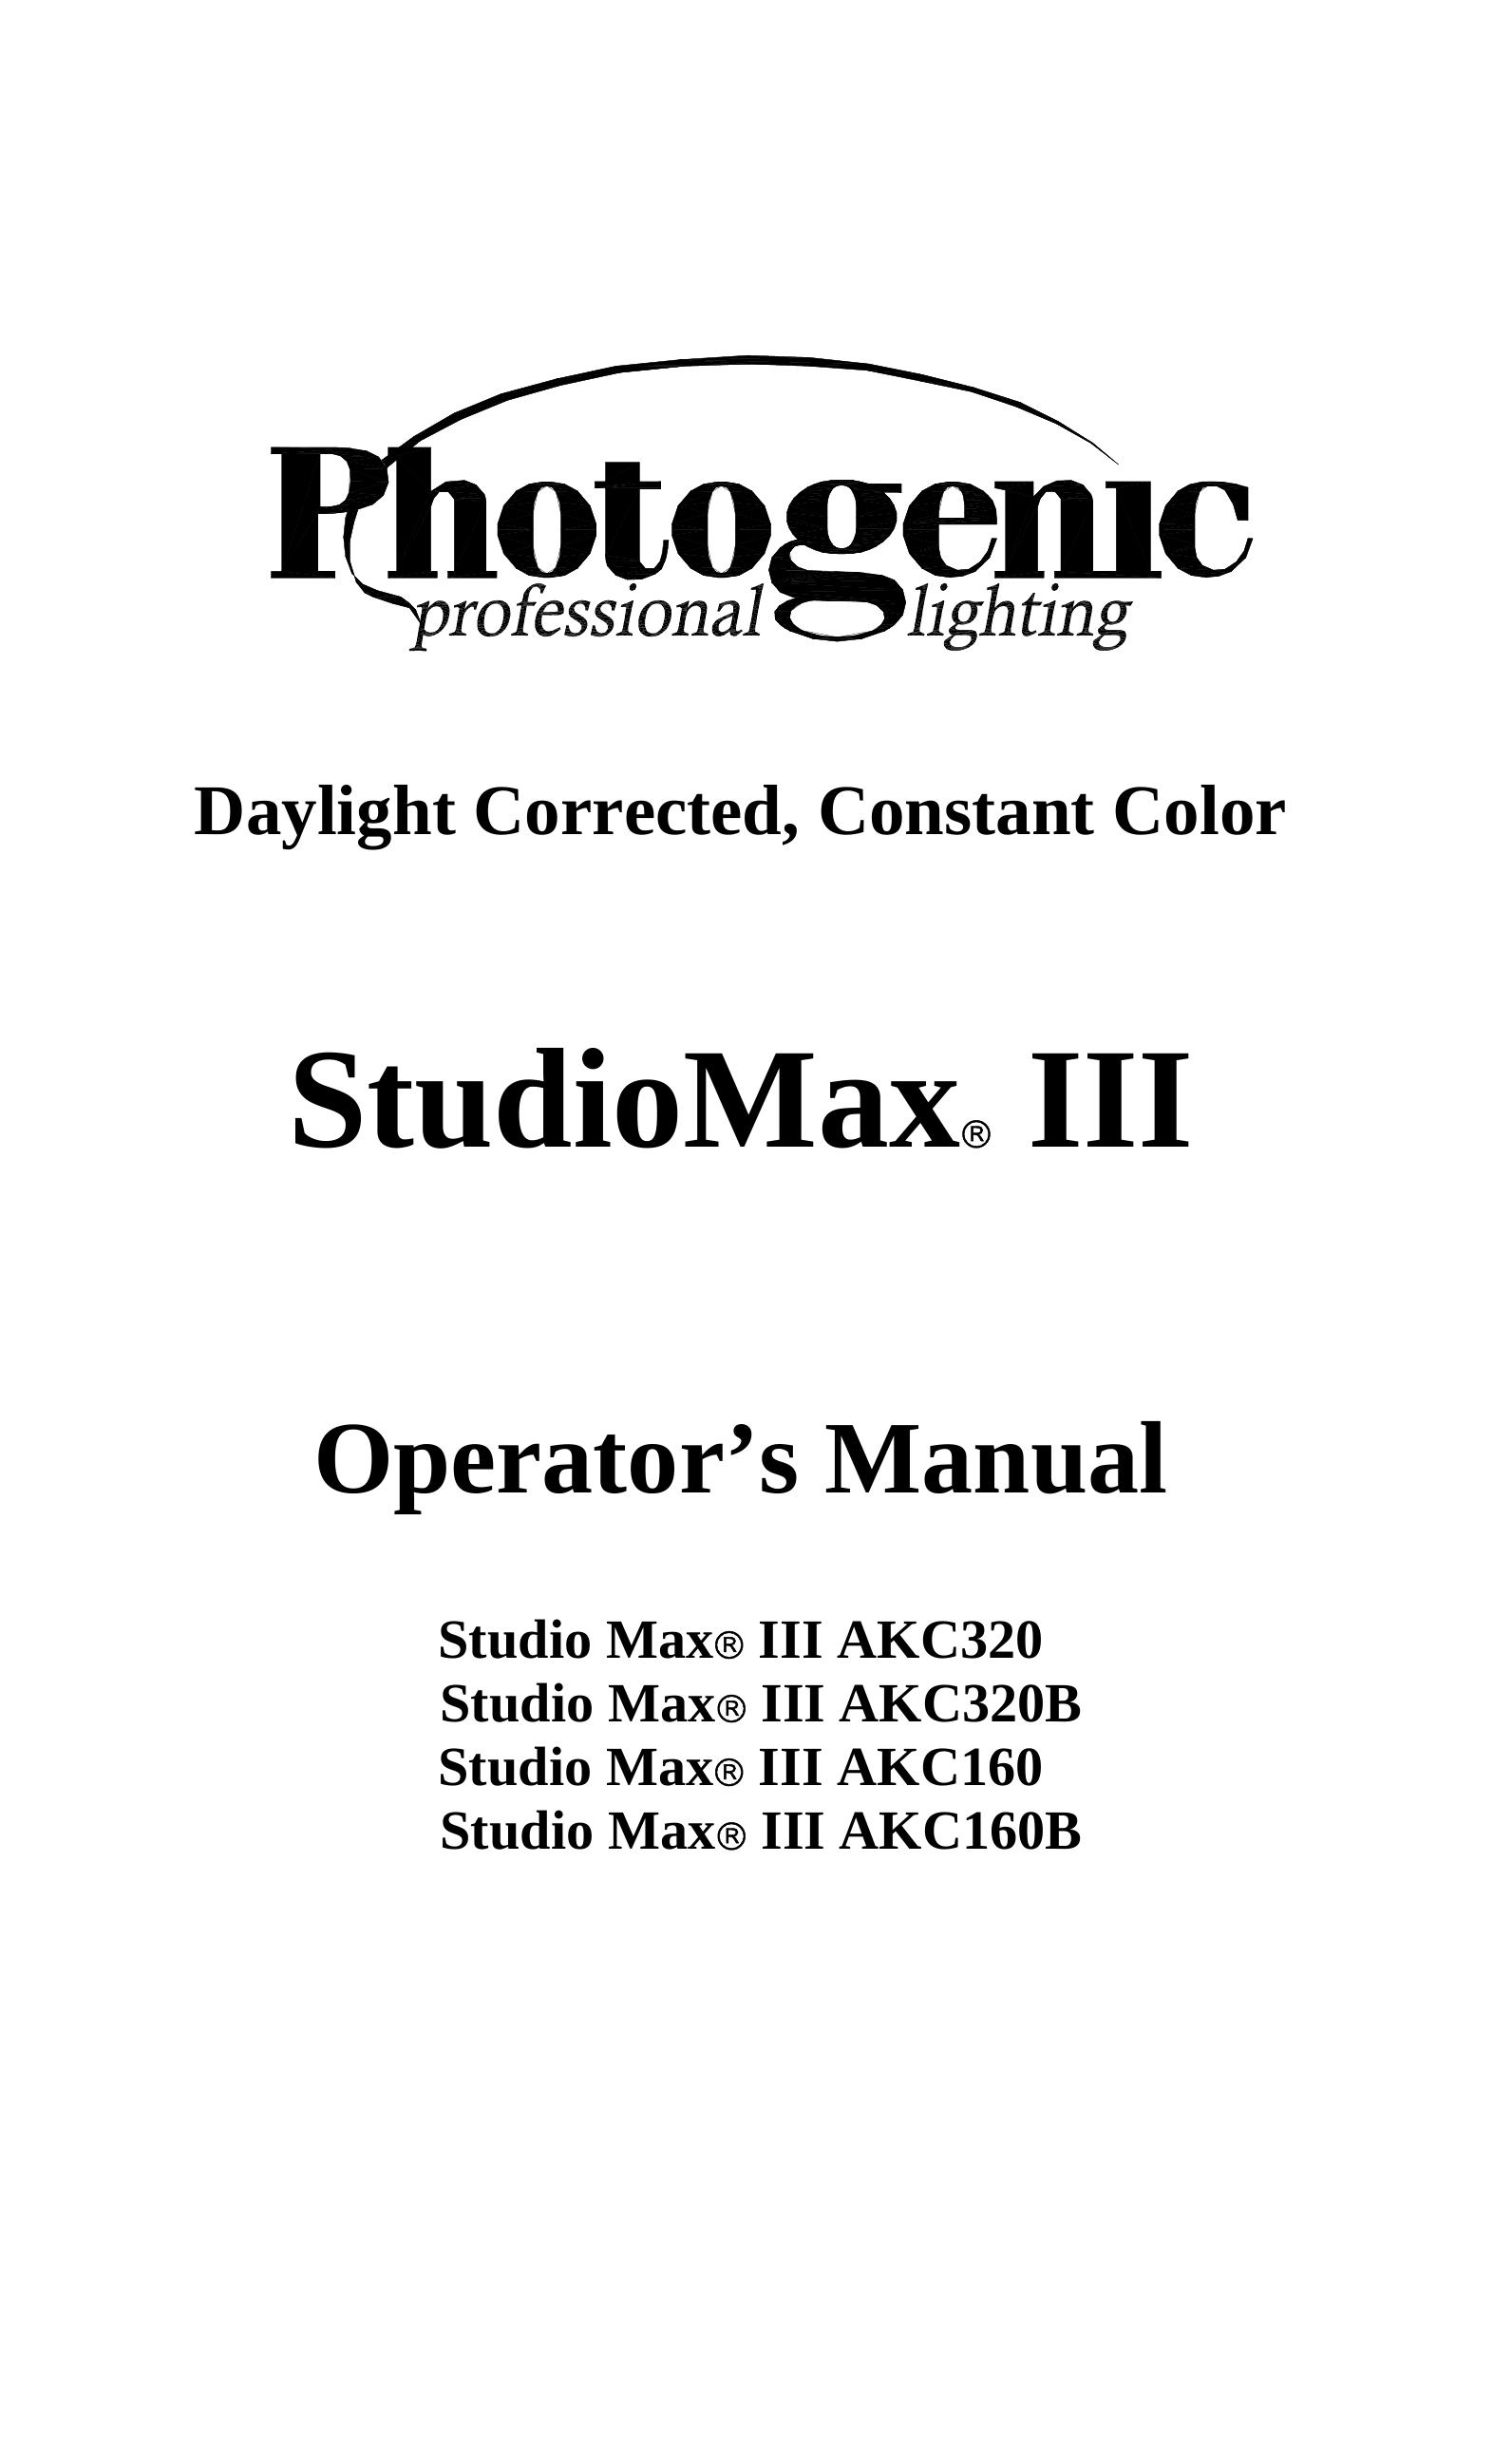 Photogenic Professional Lighting AKC320B Camera Flash User Manual